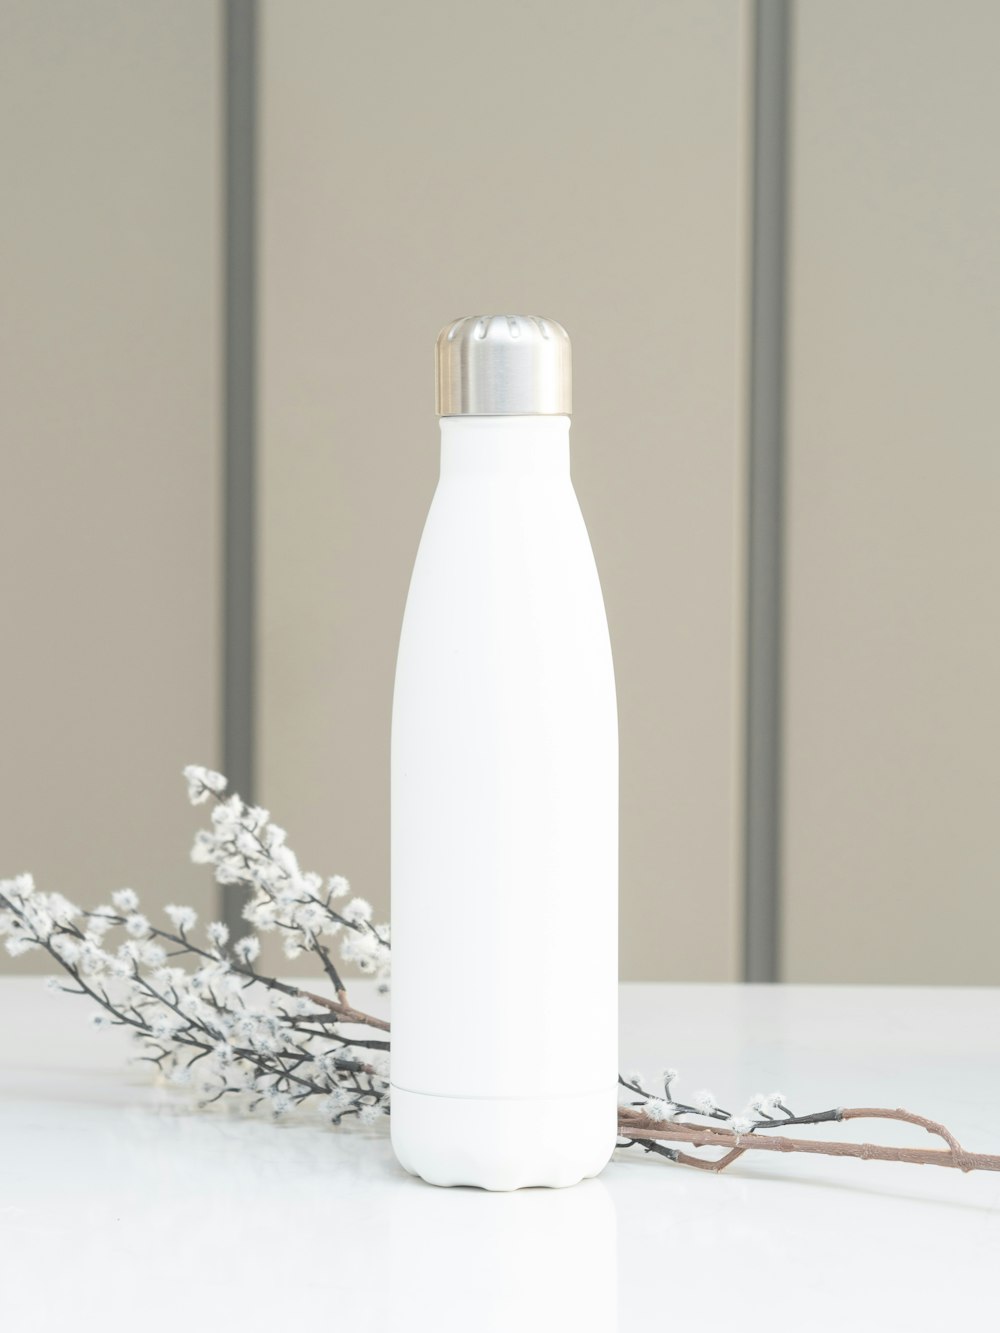 Botella blanca sobre mesa blanca